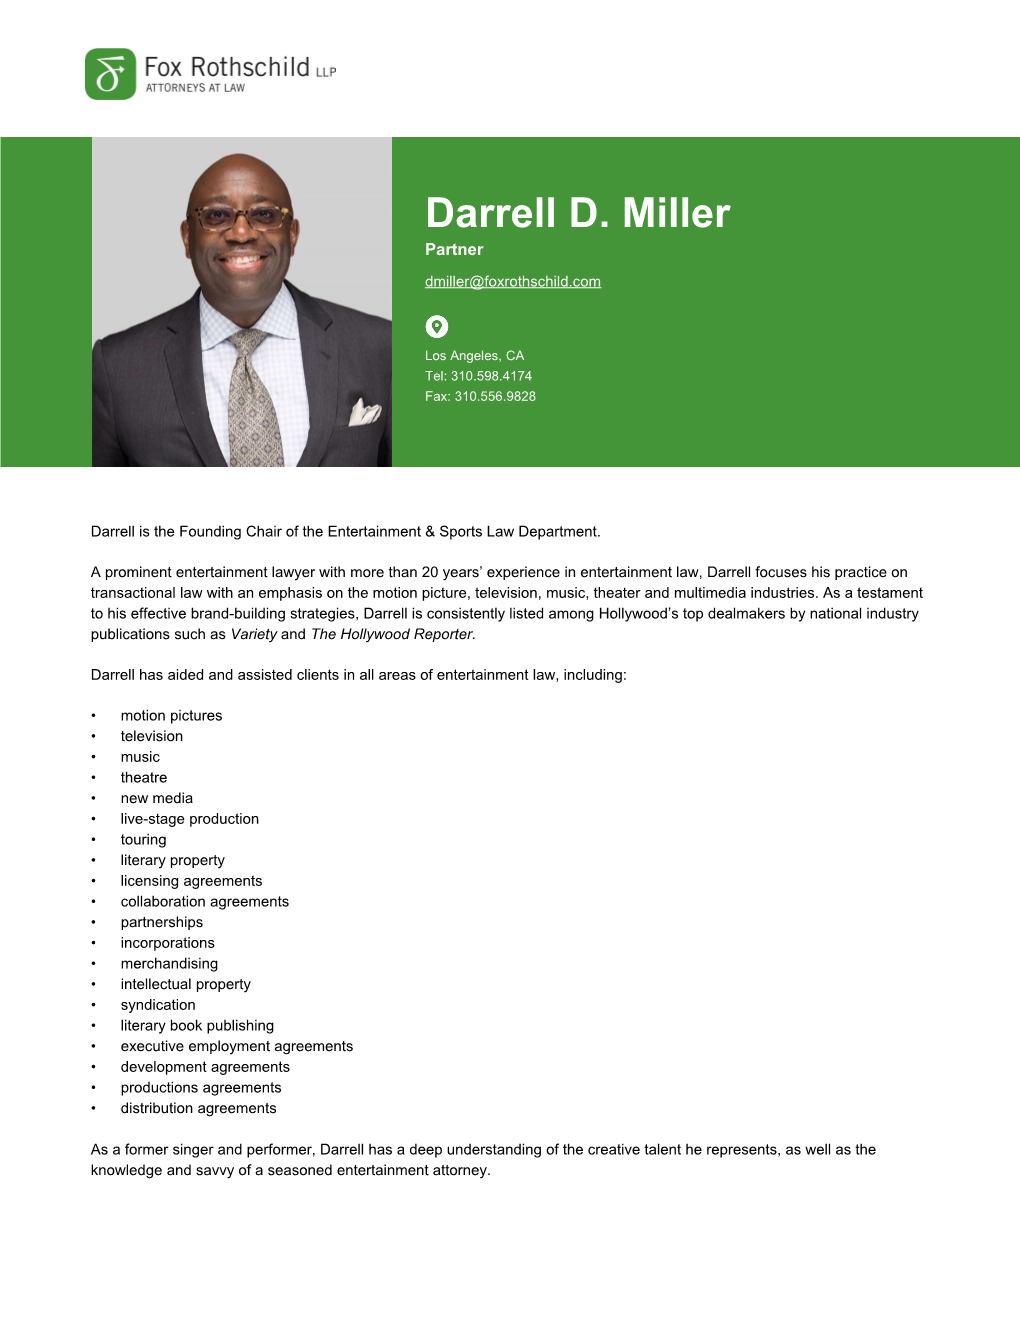 Darrell D. Miller Partner